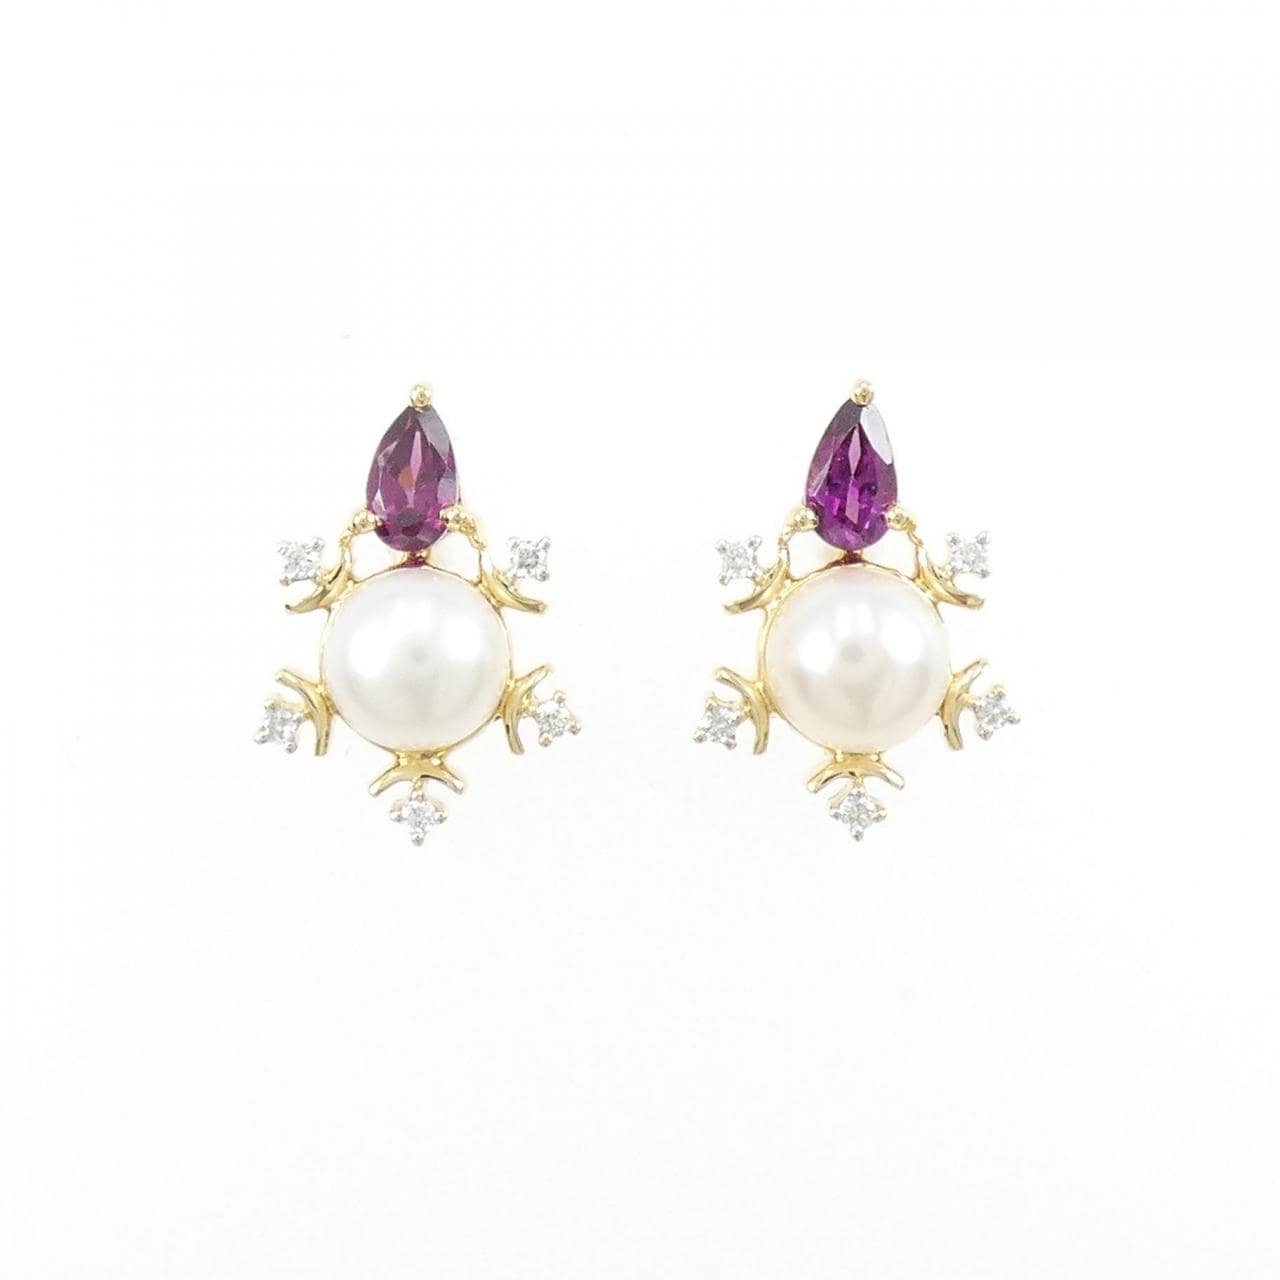 750YG/K18YG Snowflake colored stone earrings